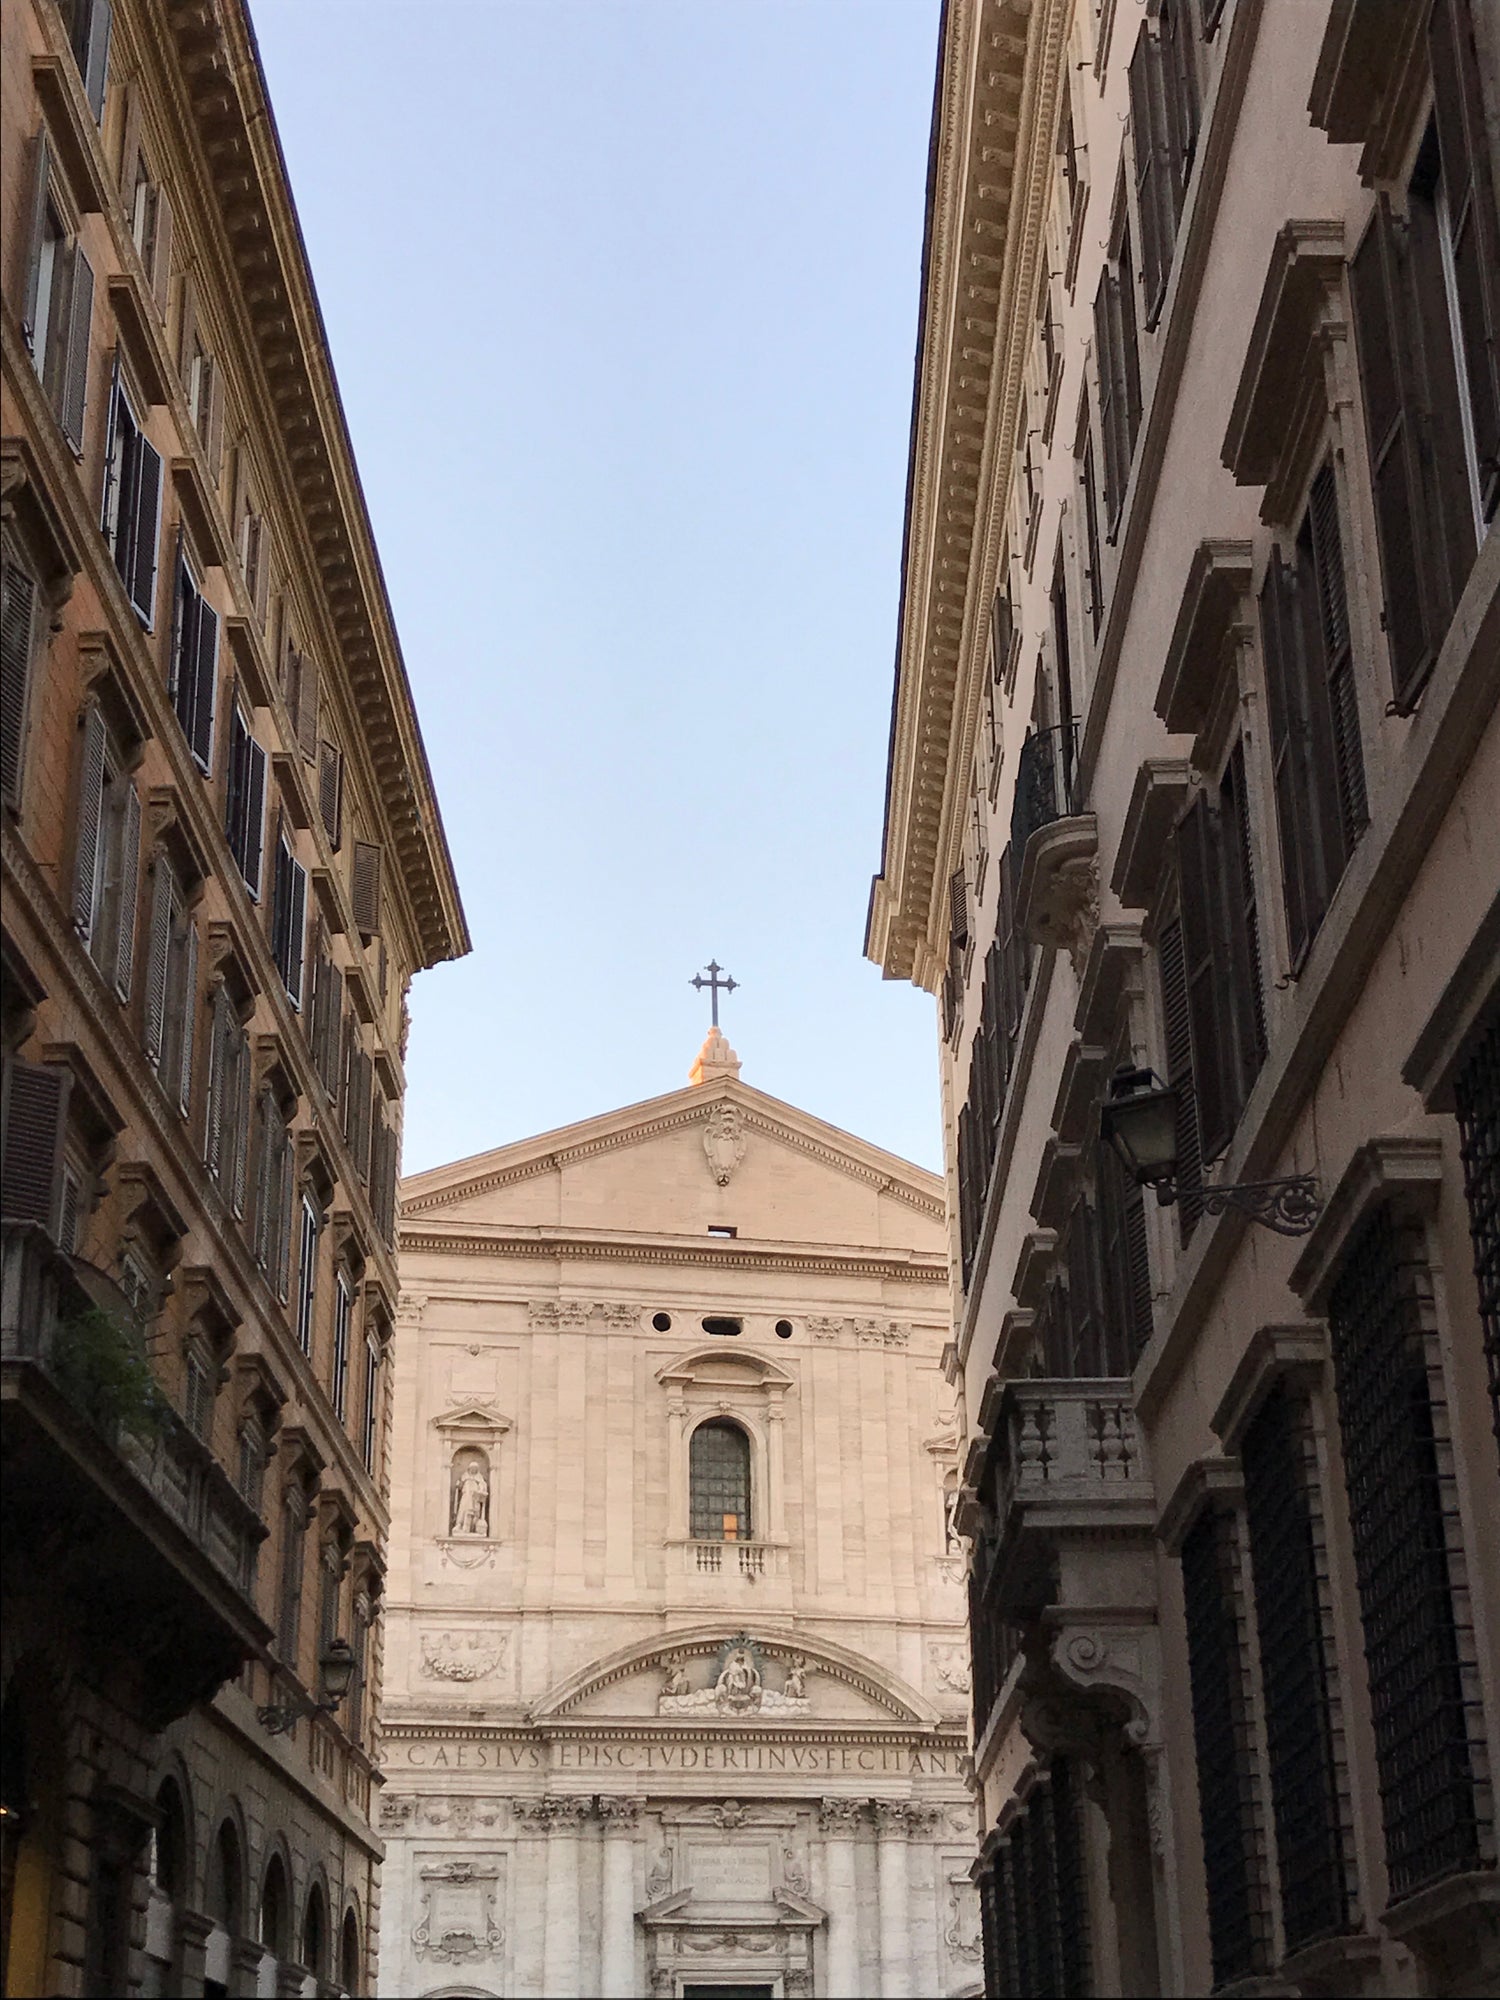 Roma building facades and church under a bright blue sky